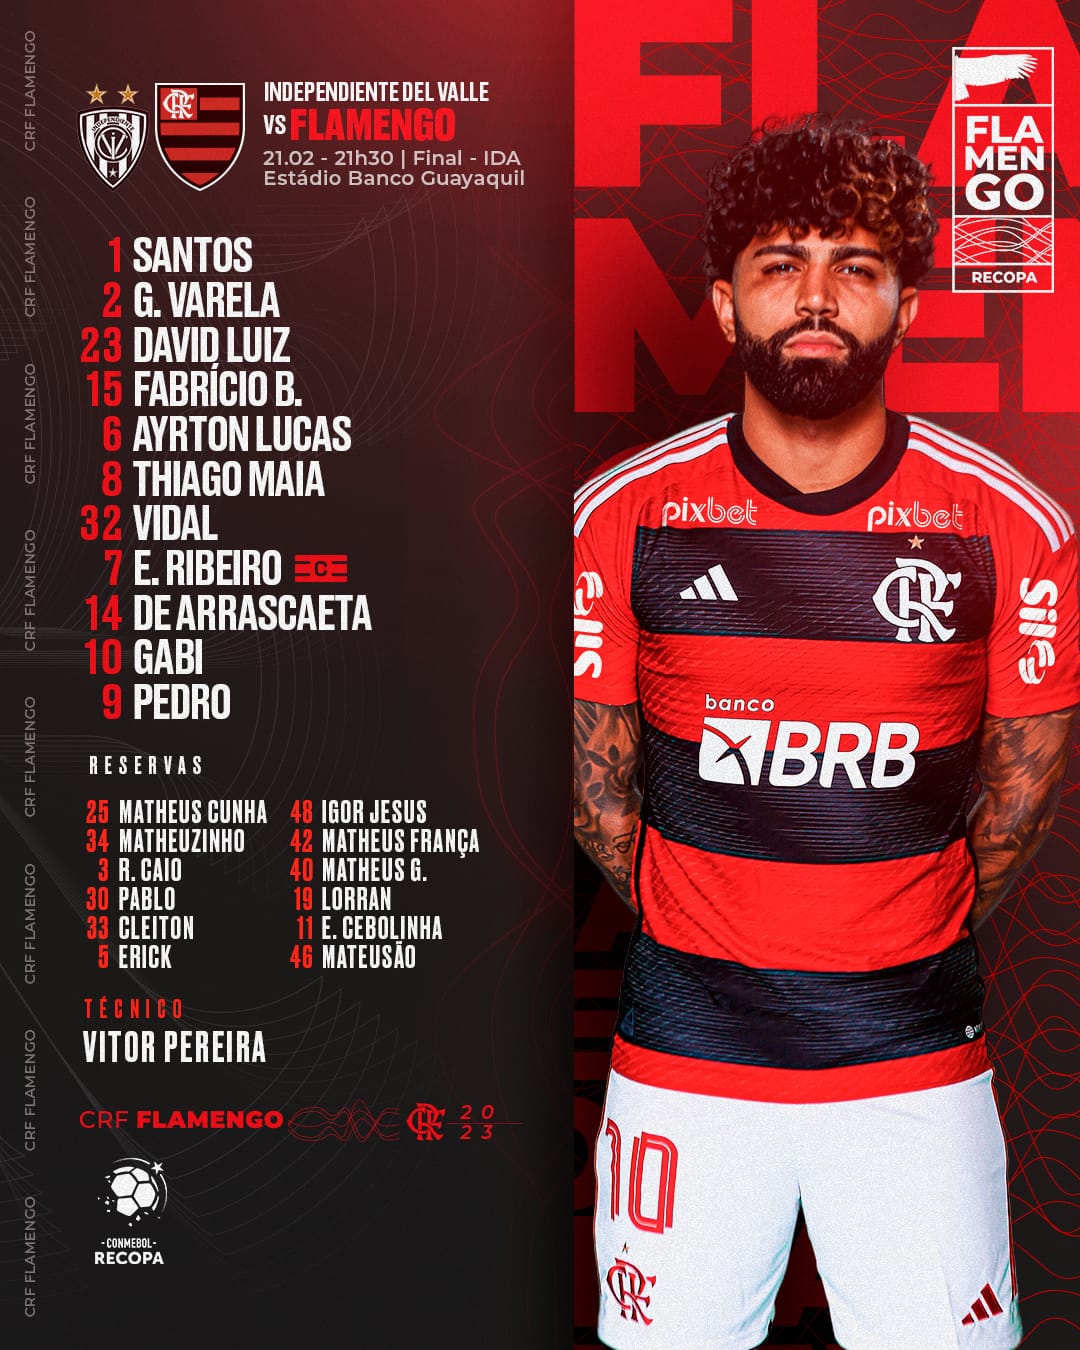 Flamengo x Independiente del Valle: onde assistir ao vivo, horário